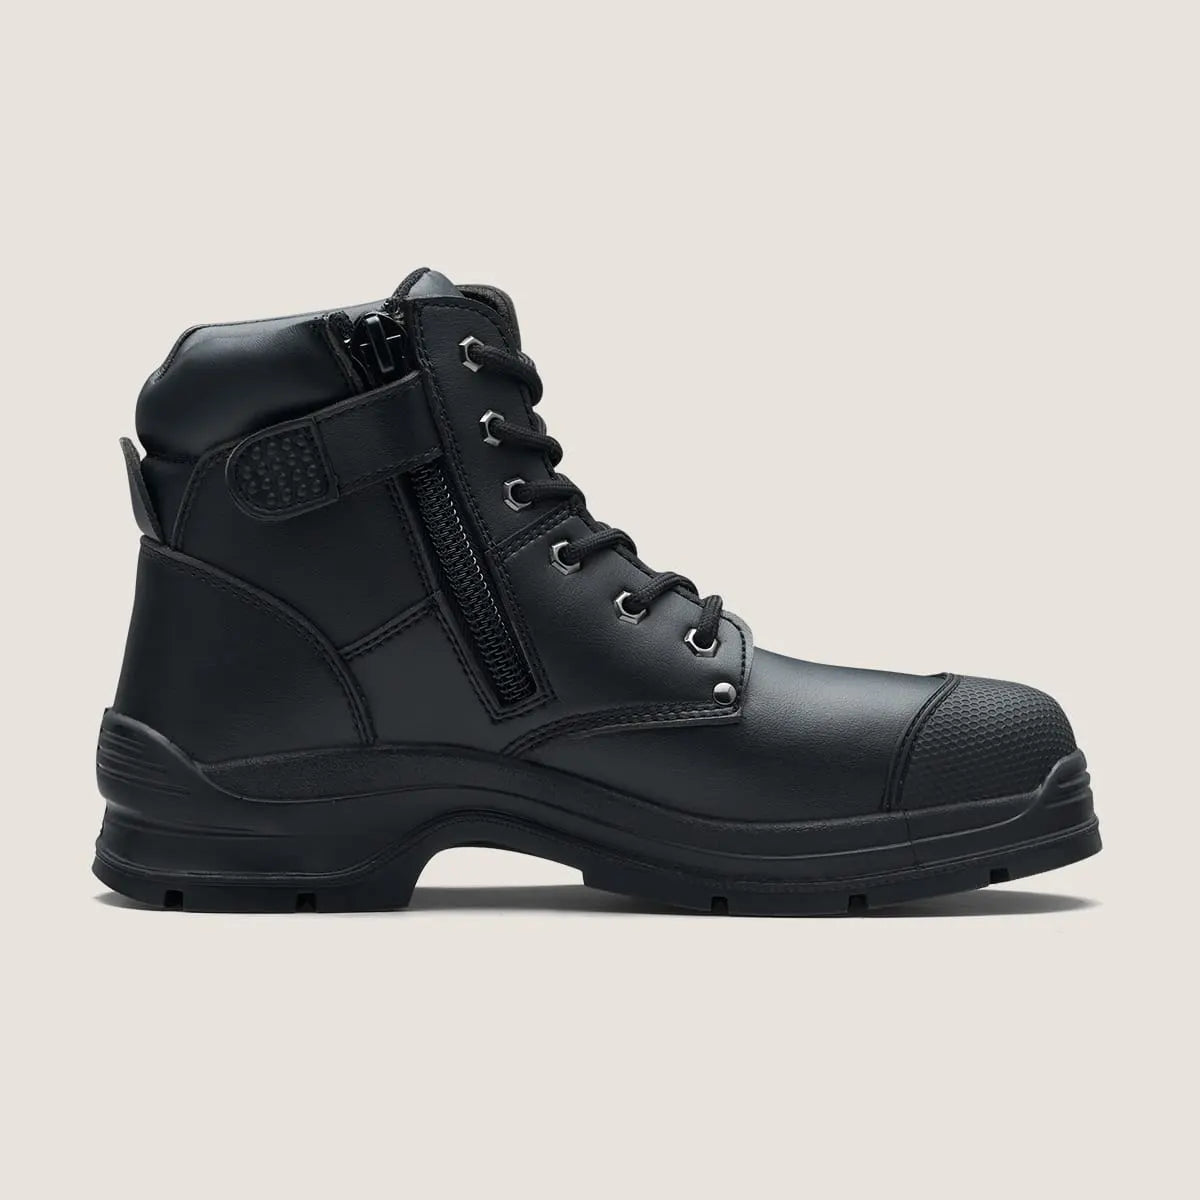 Blundstone 322 Unisex Zip Up Series Safety Boots-Black